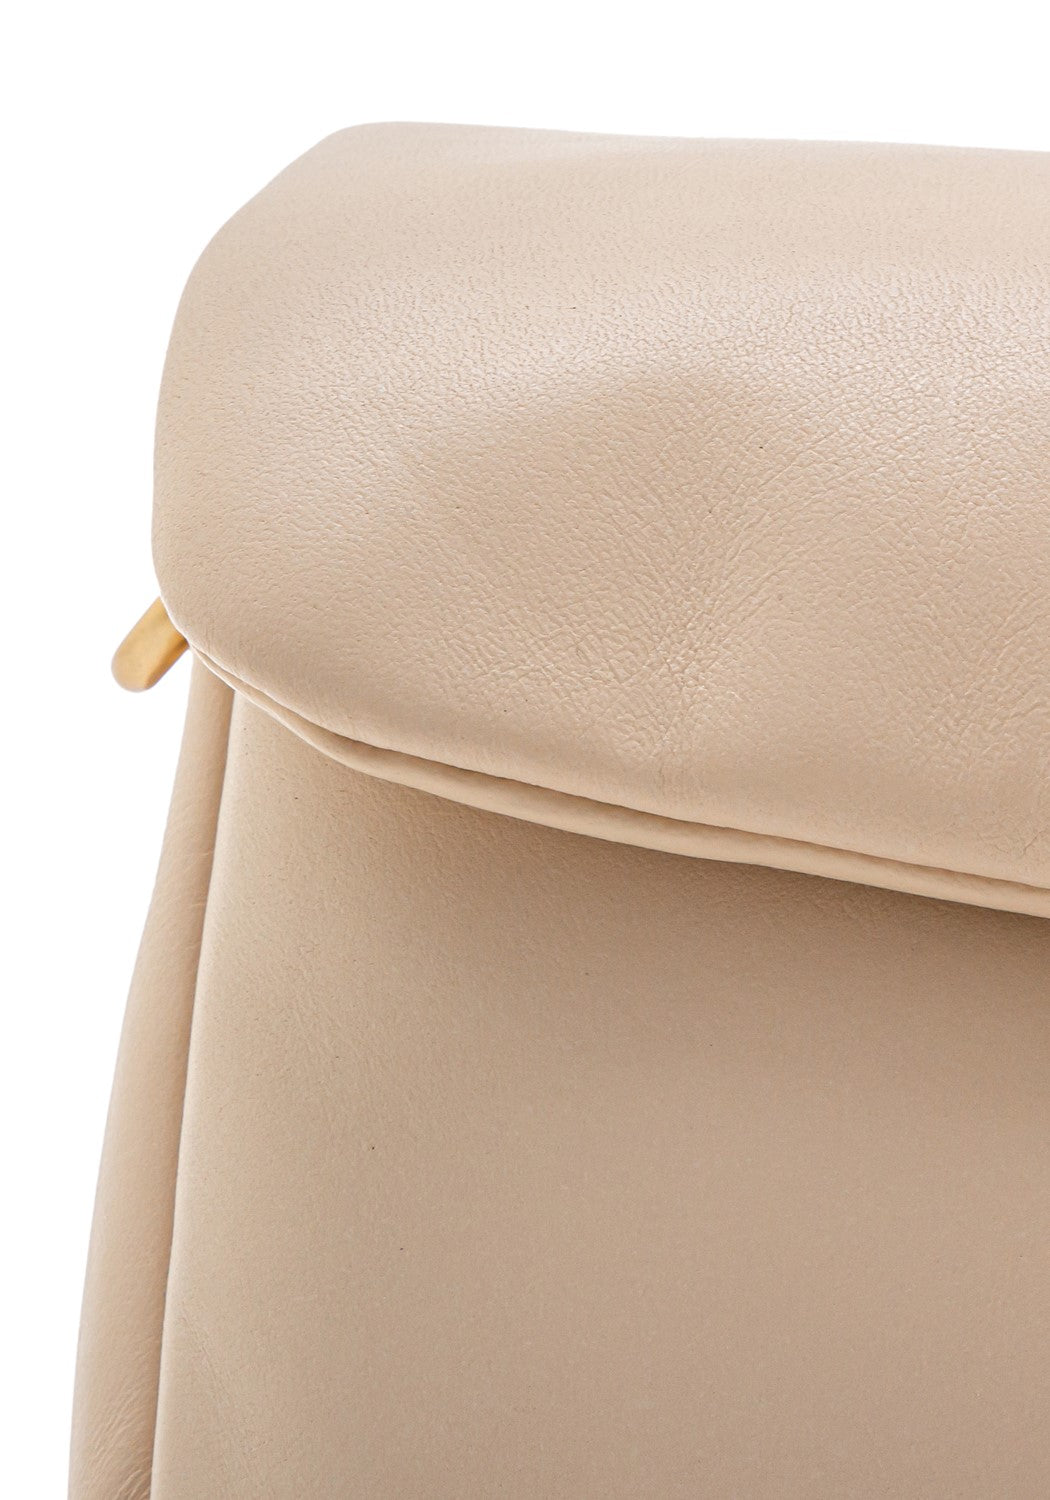 Pillow Tabby Shoulder Bag Leather ivory | Bildmaterial bereitgestellt von SHOES.PLEASE.